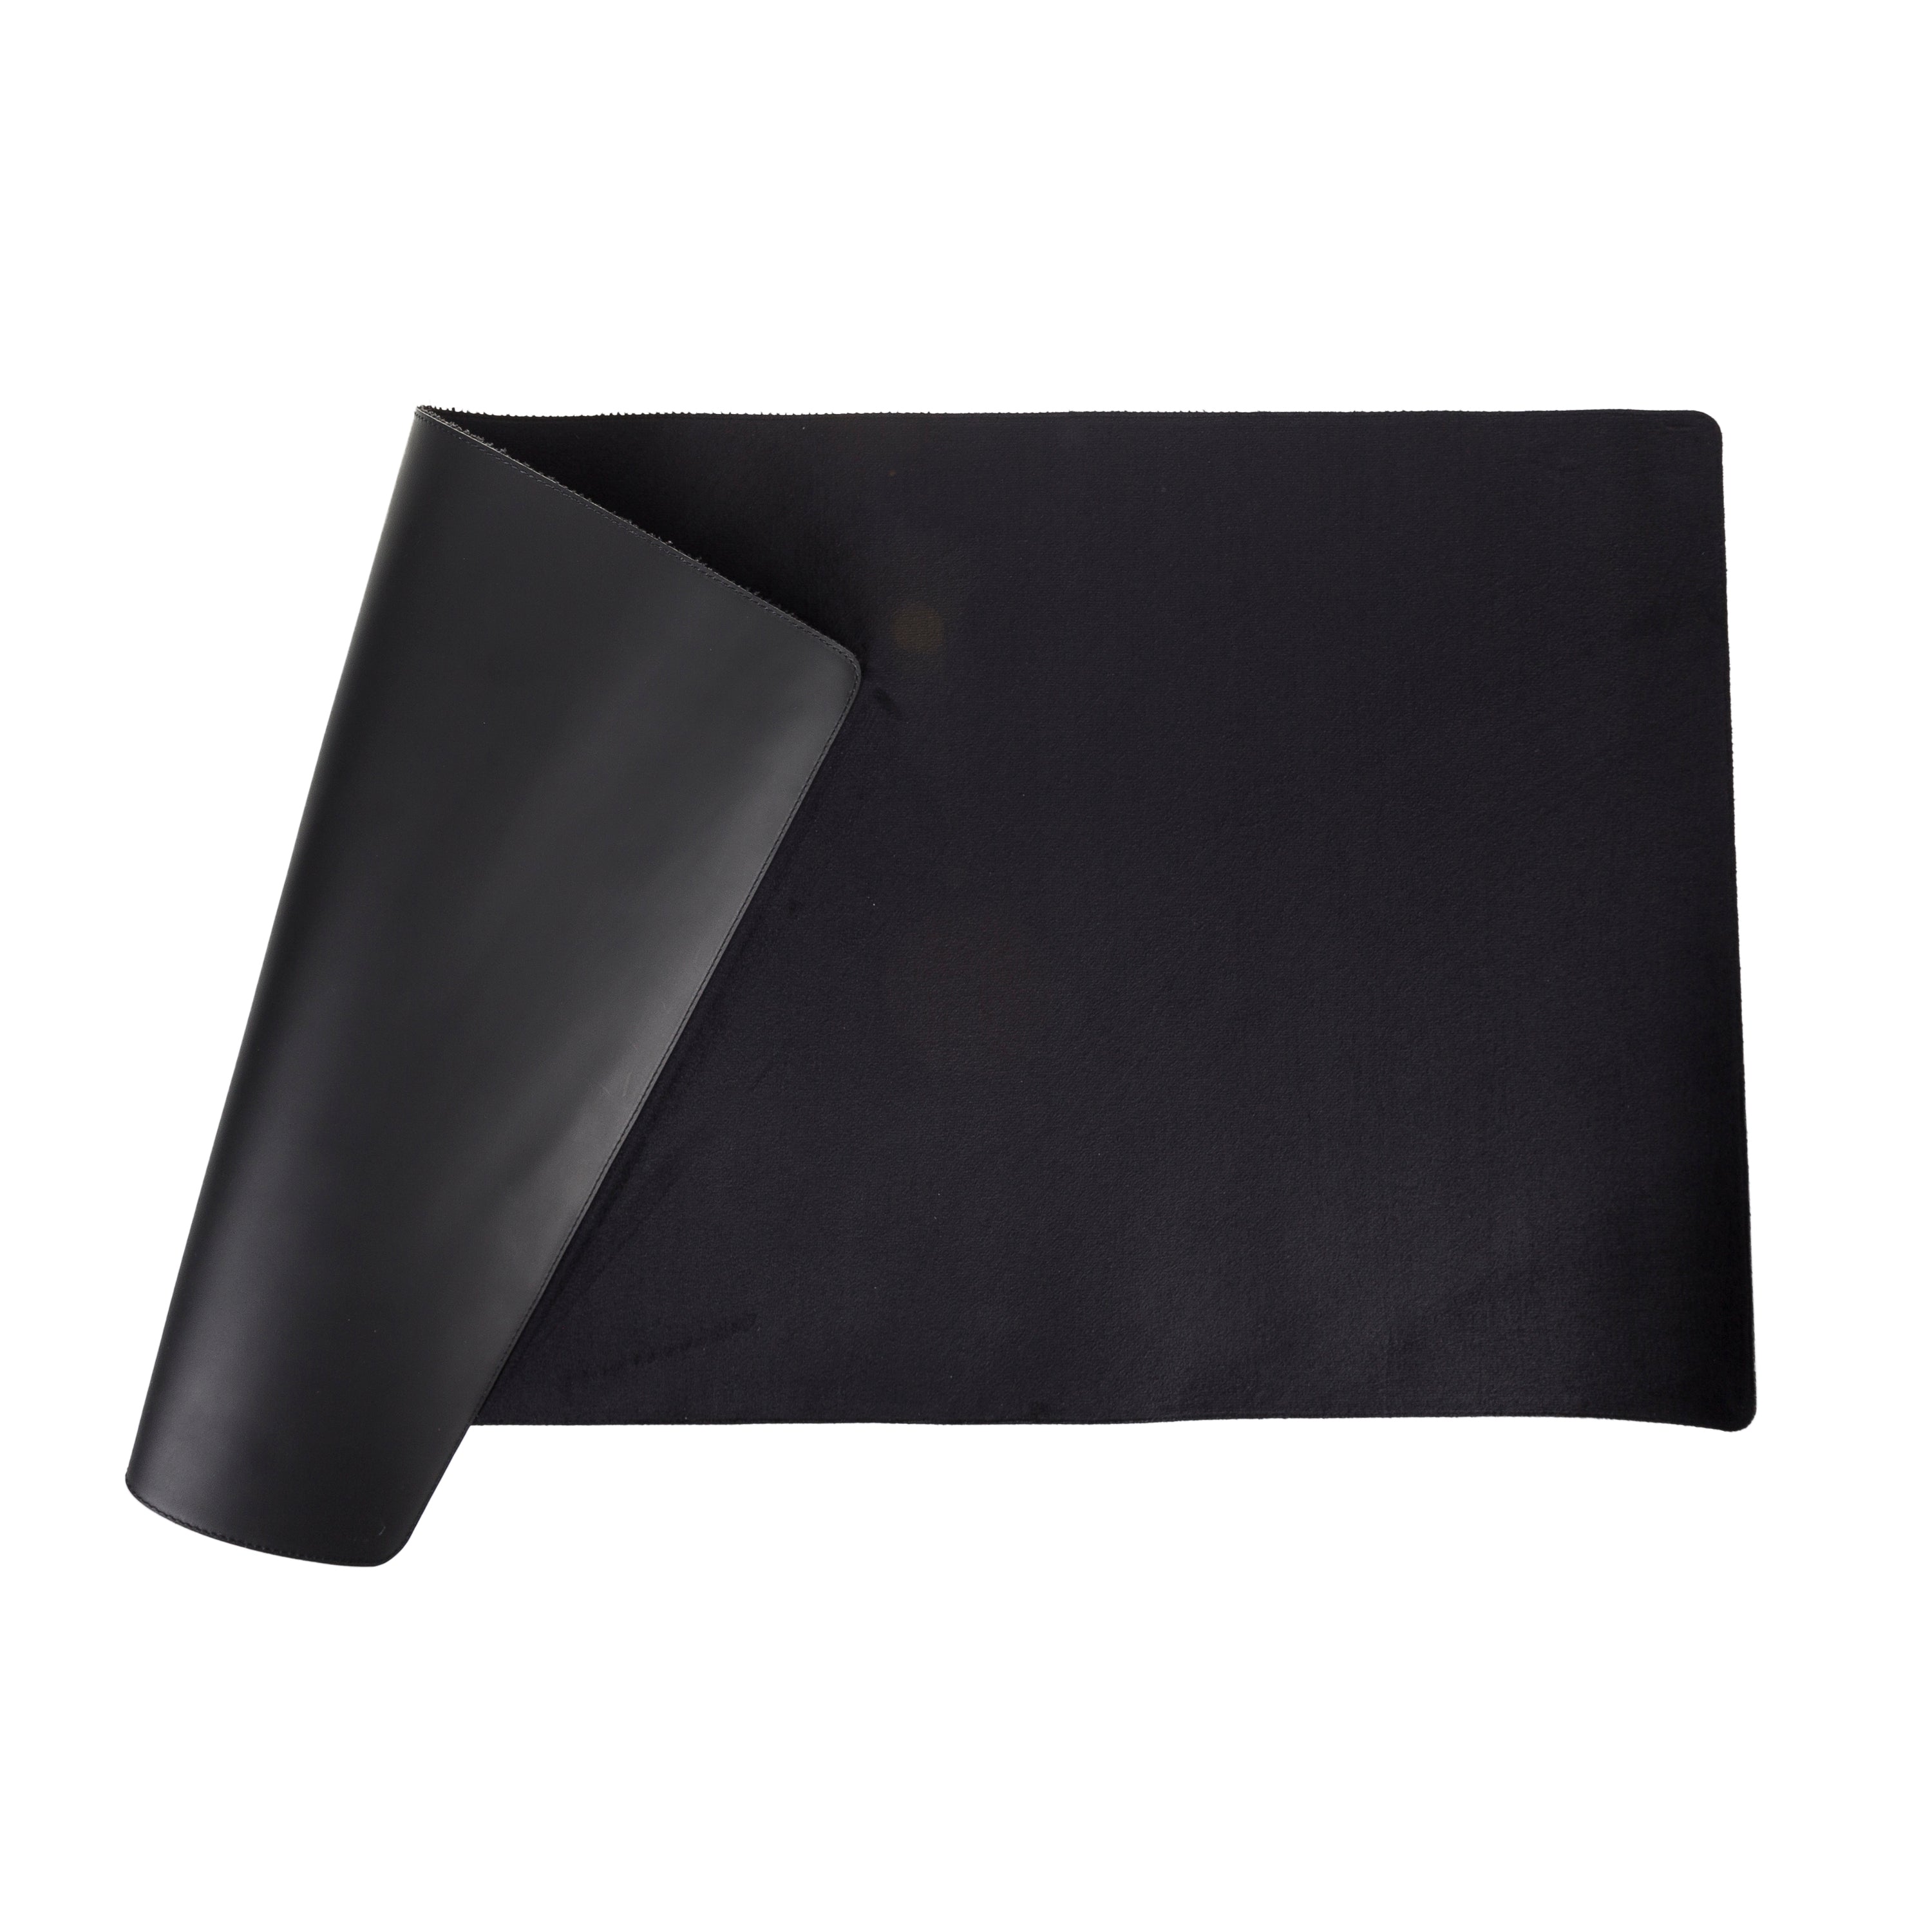 DelfiCase Genuine Matte Black Leather Deskmat, Computer Pad, Office Desk Pad 7